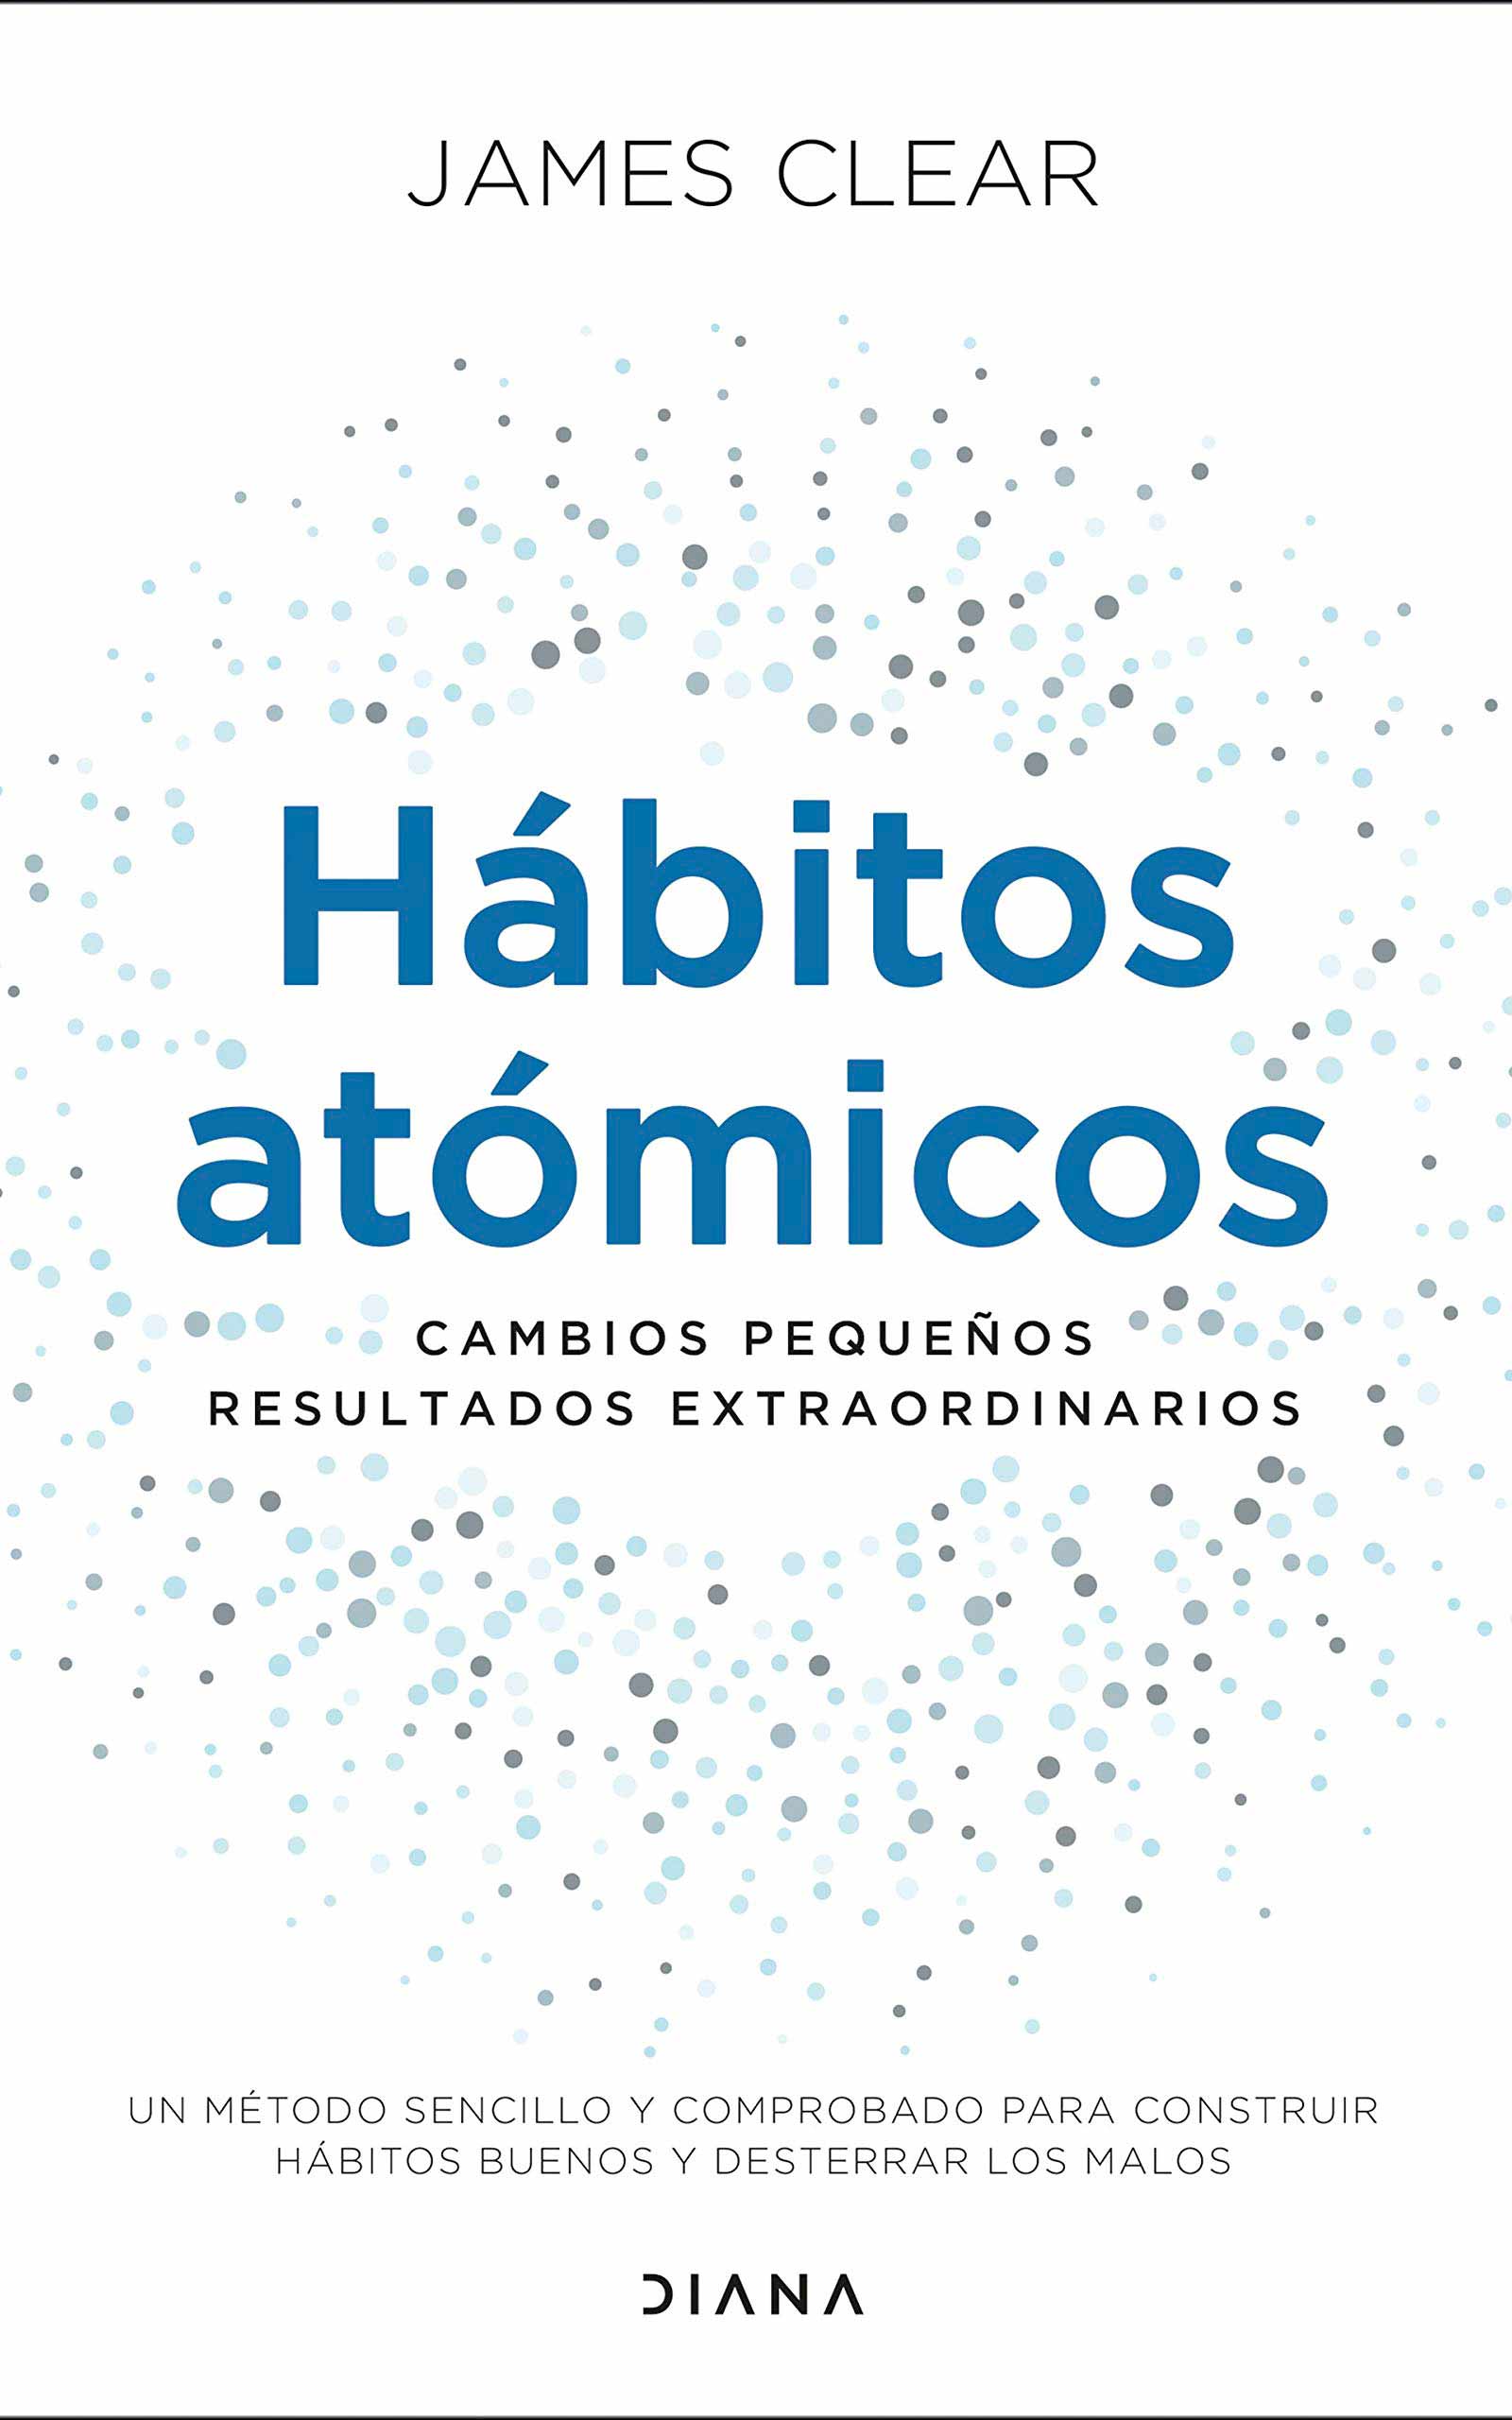 Hábitos atómicos - James Clear - 19WA49762_1